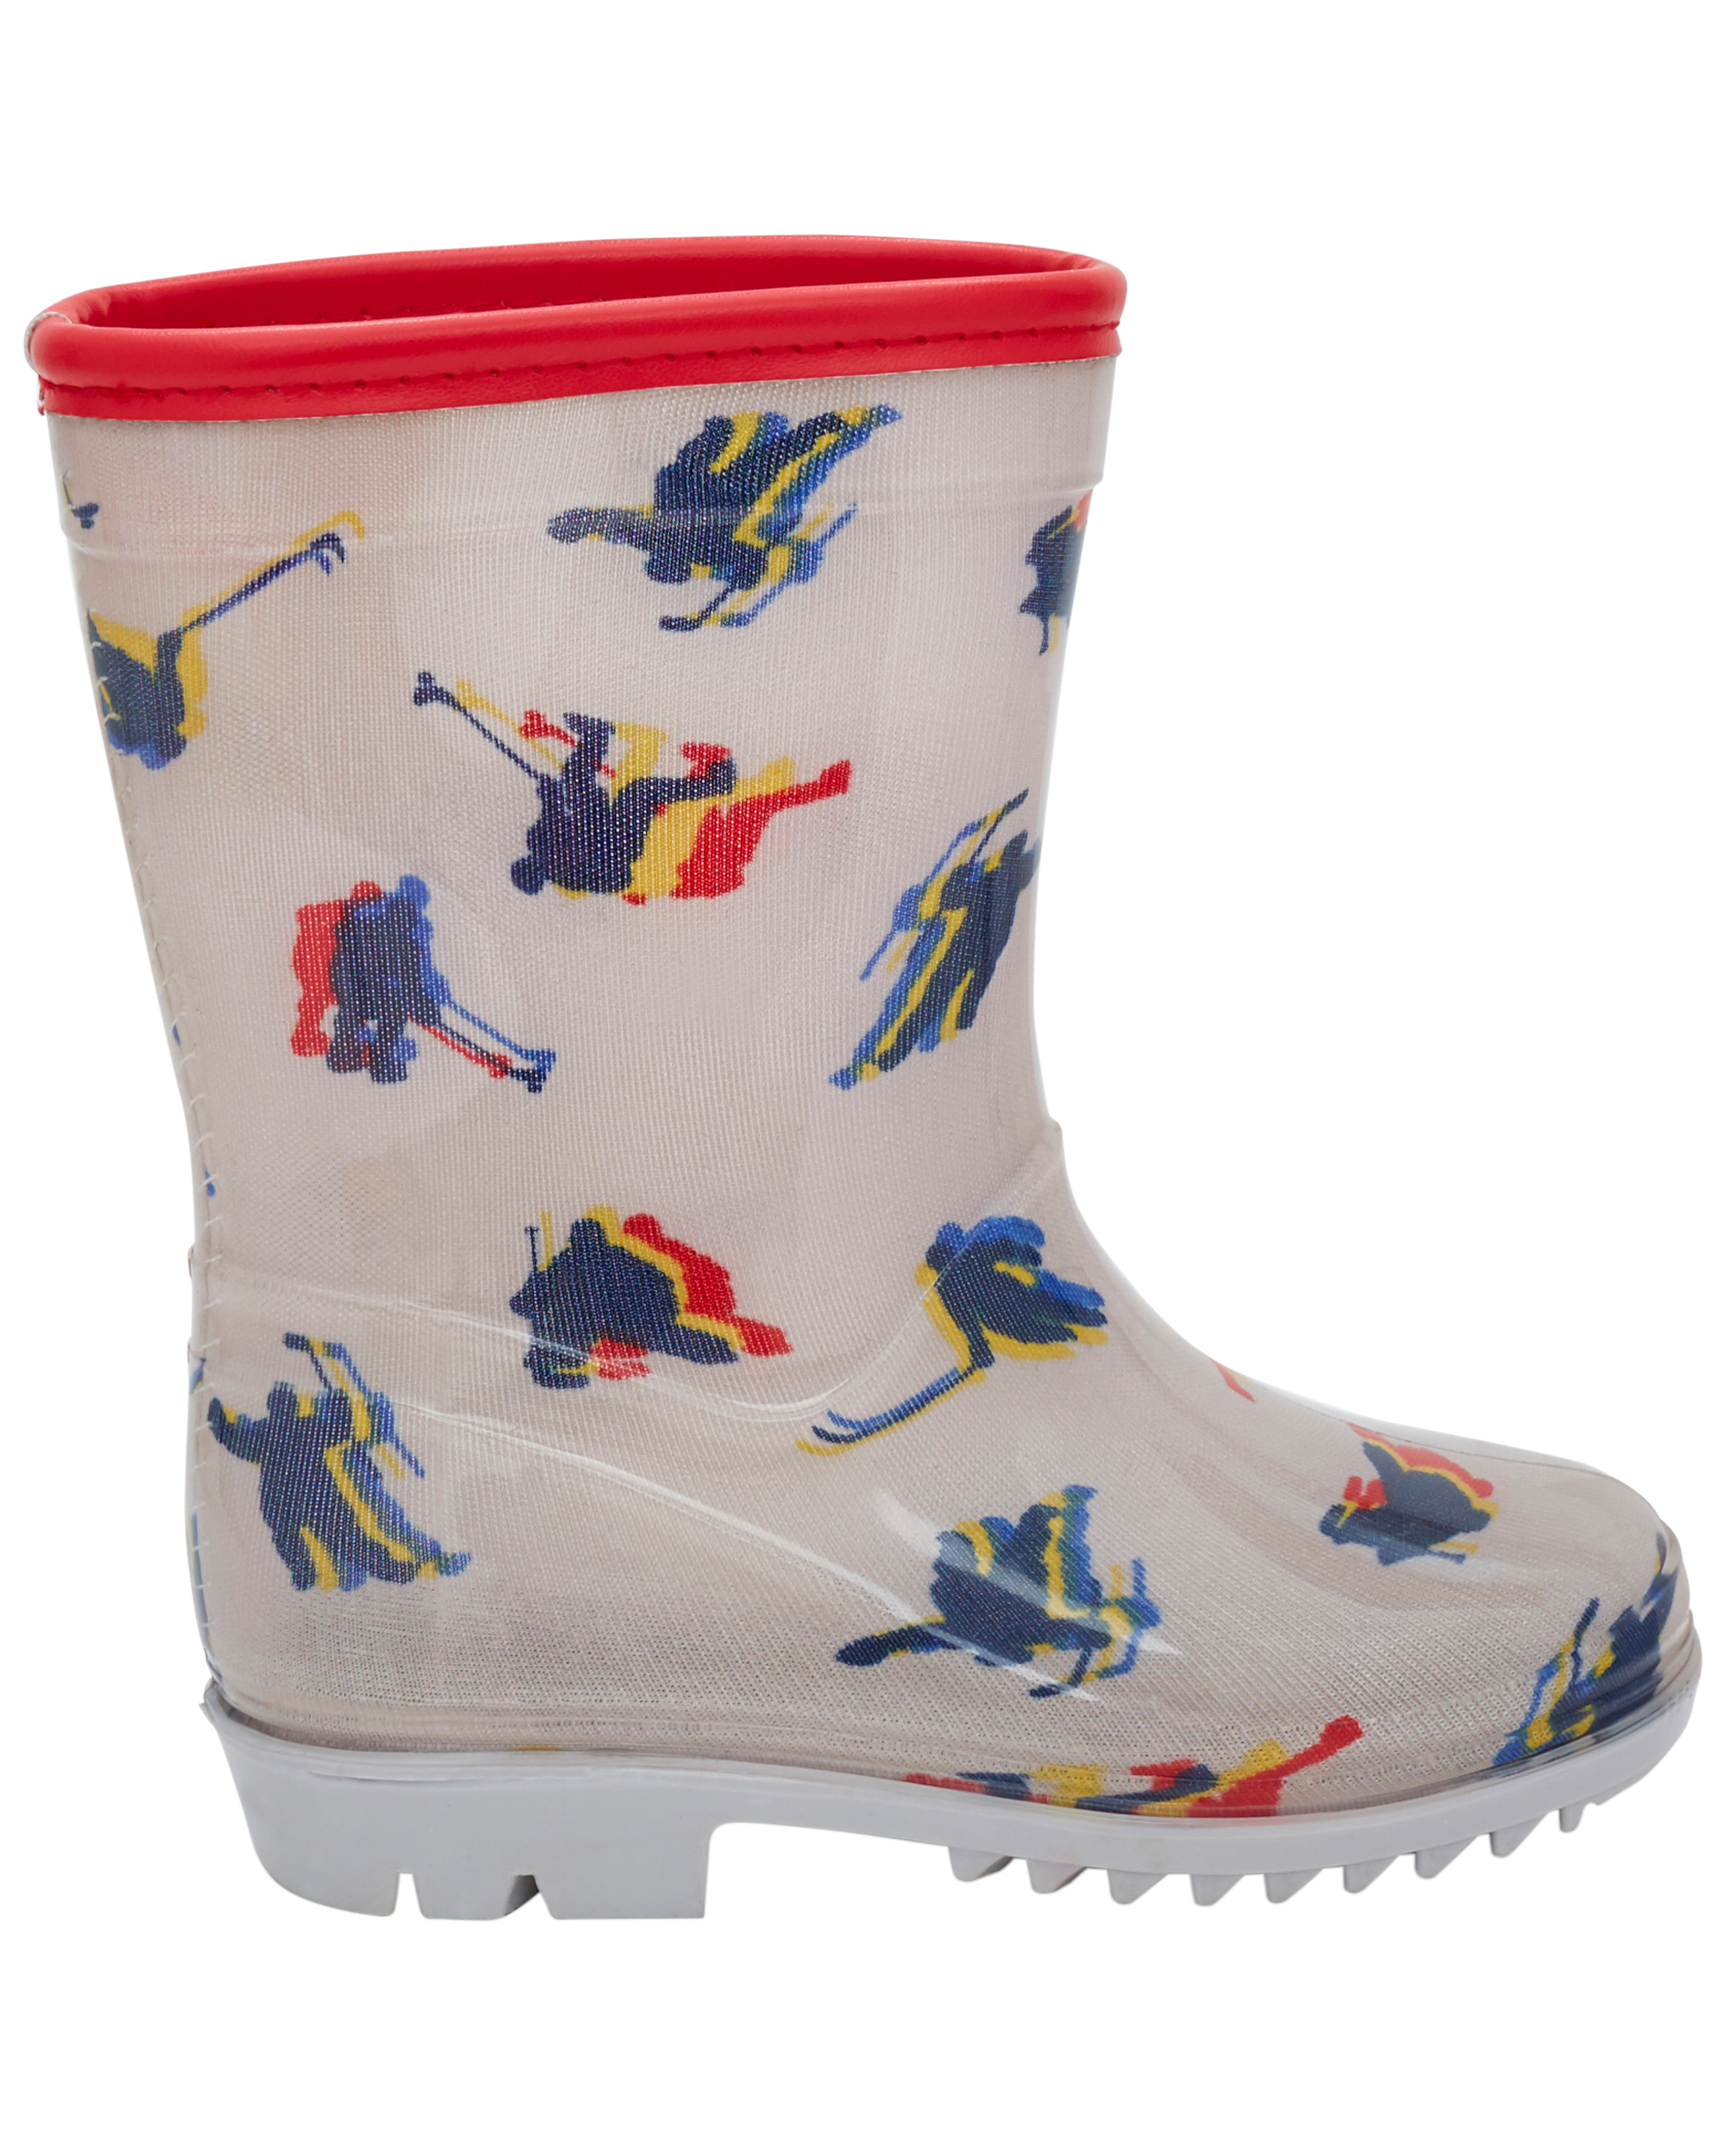 Toddler Hockey Print Rain Boots